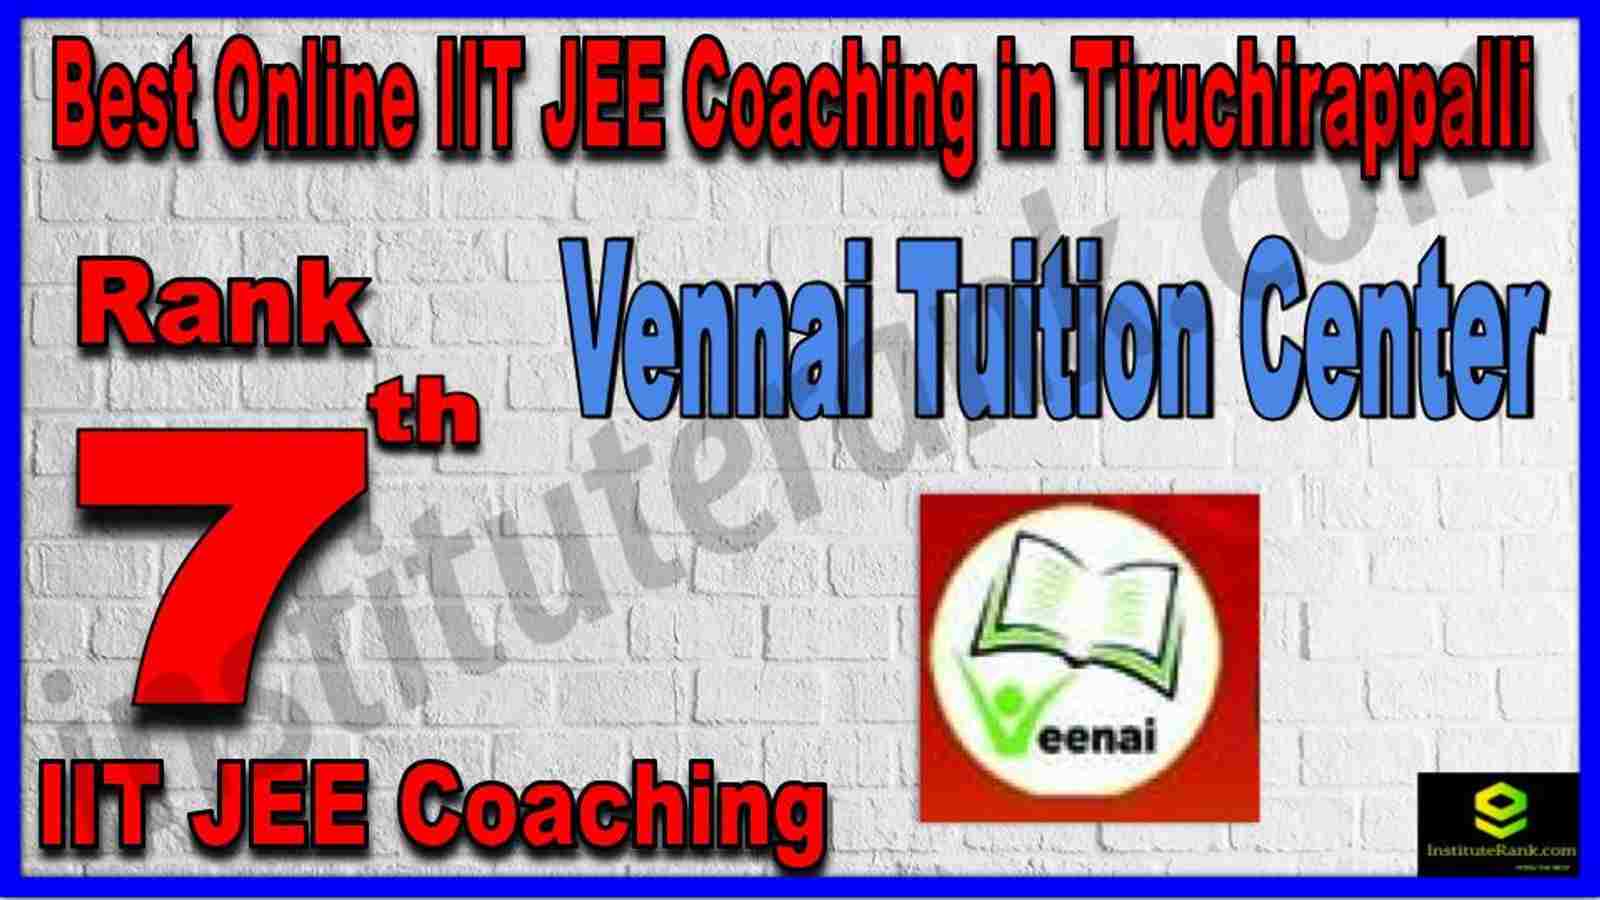 Rank 7th Best Online IIT JEE Coaching in Tiruchirappalli